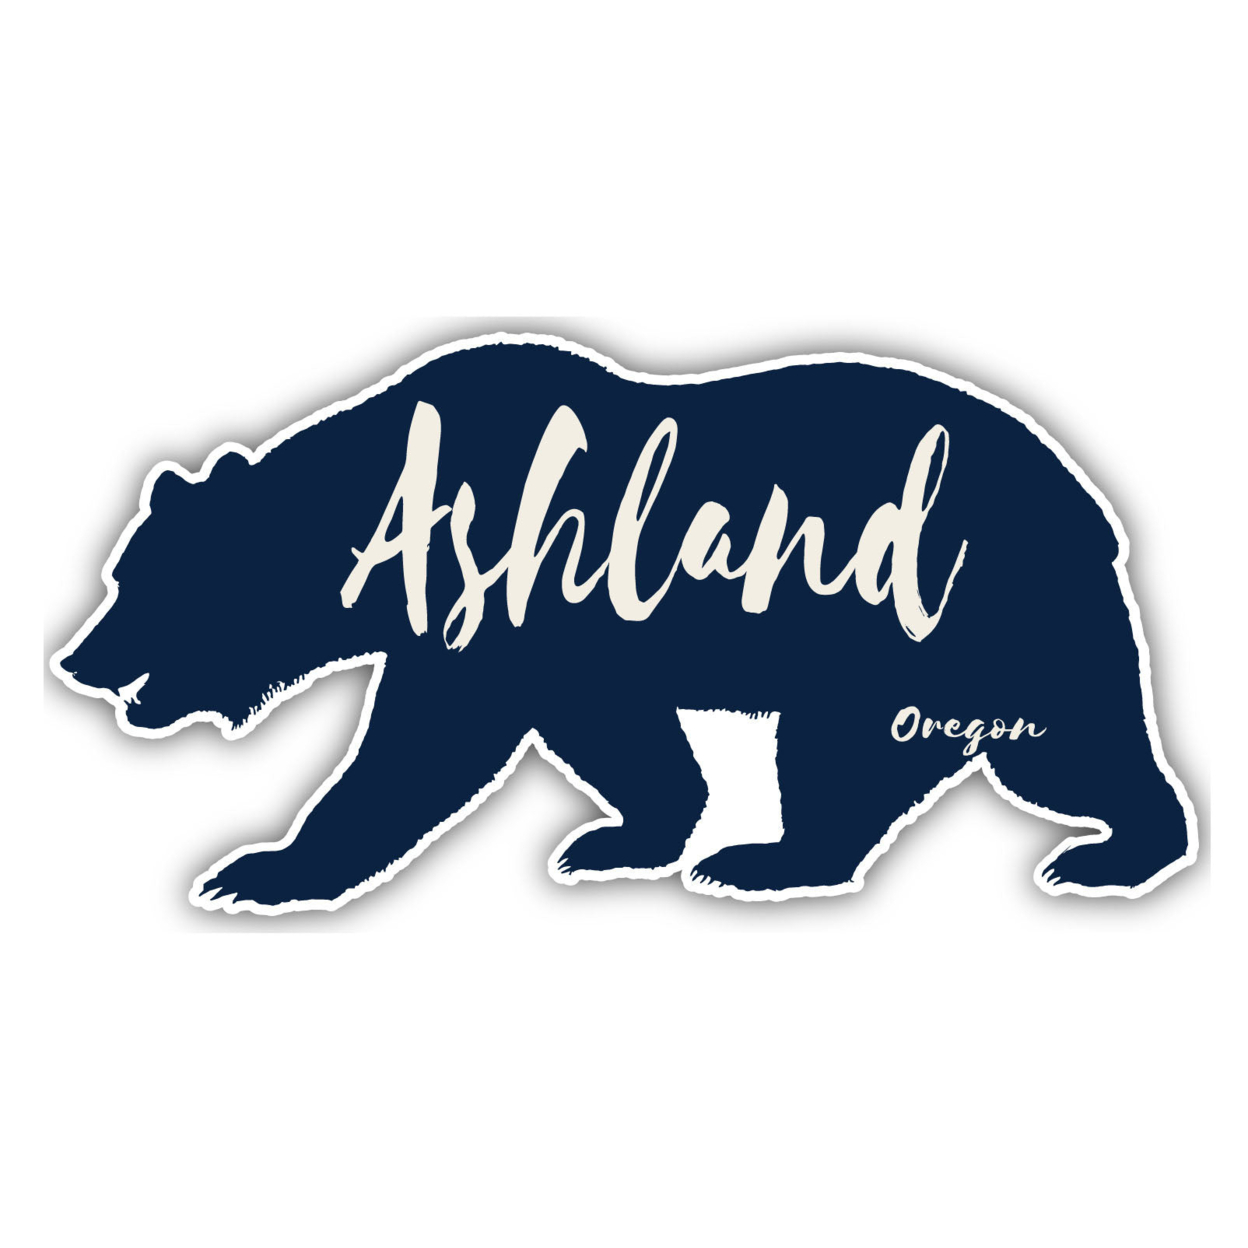 Ashland Oregon Souvenir Decorative Stickers (Choose Theme And Size) - 4-Pack, 2-Inch, Bear